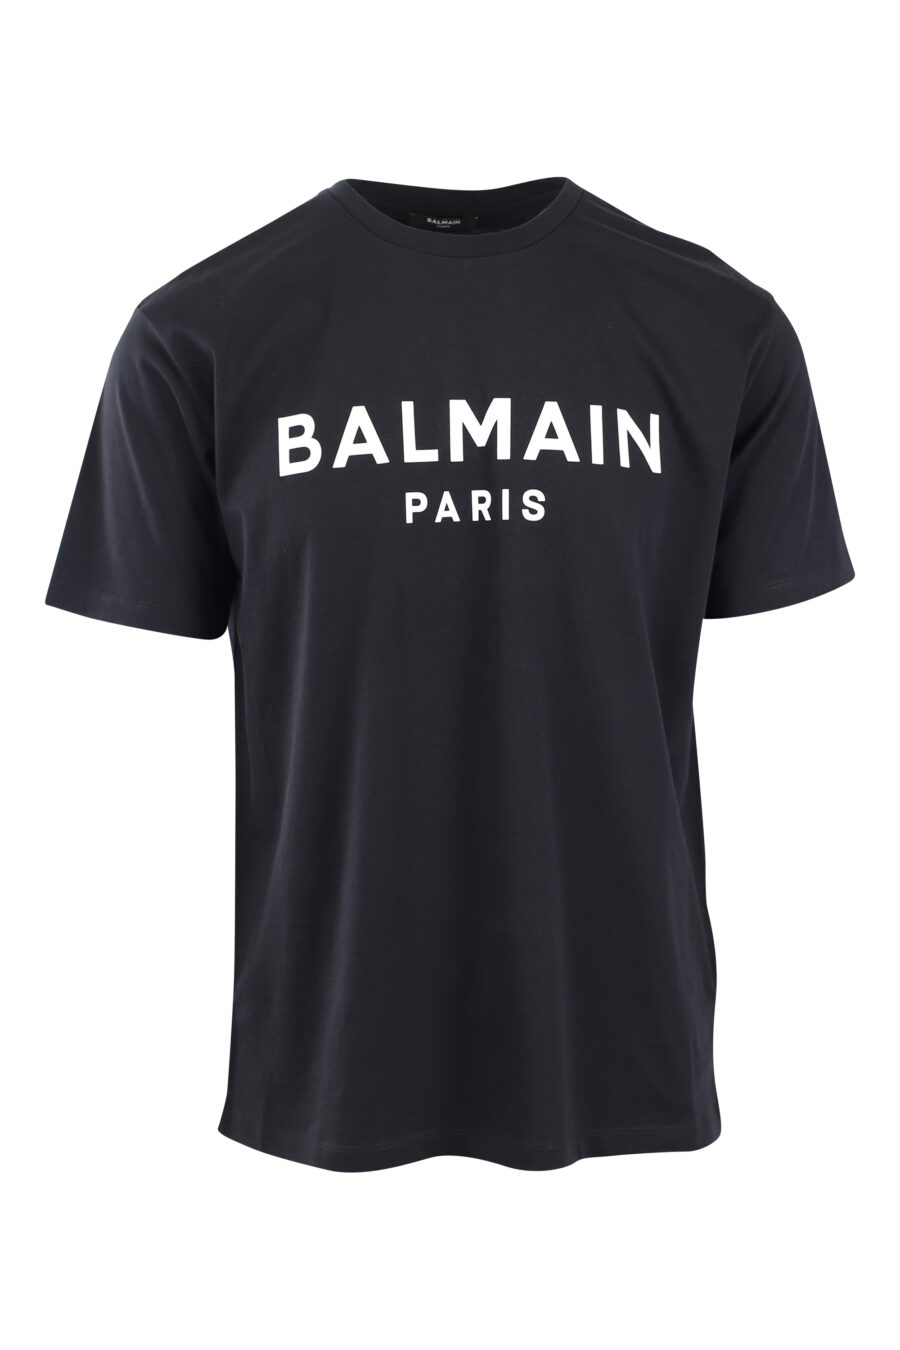 Camiseta negra con maxilogo blanco "paris" - IMG 2579